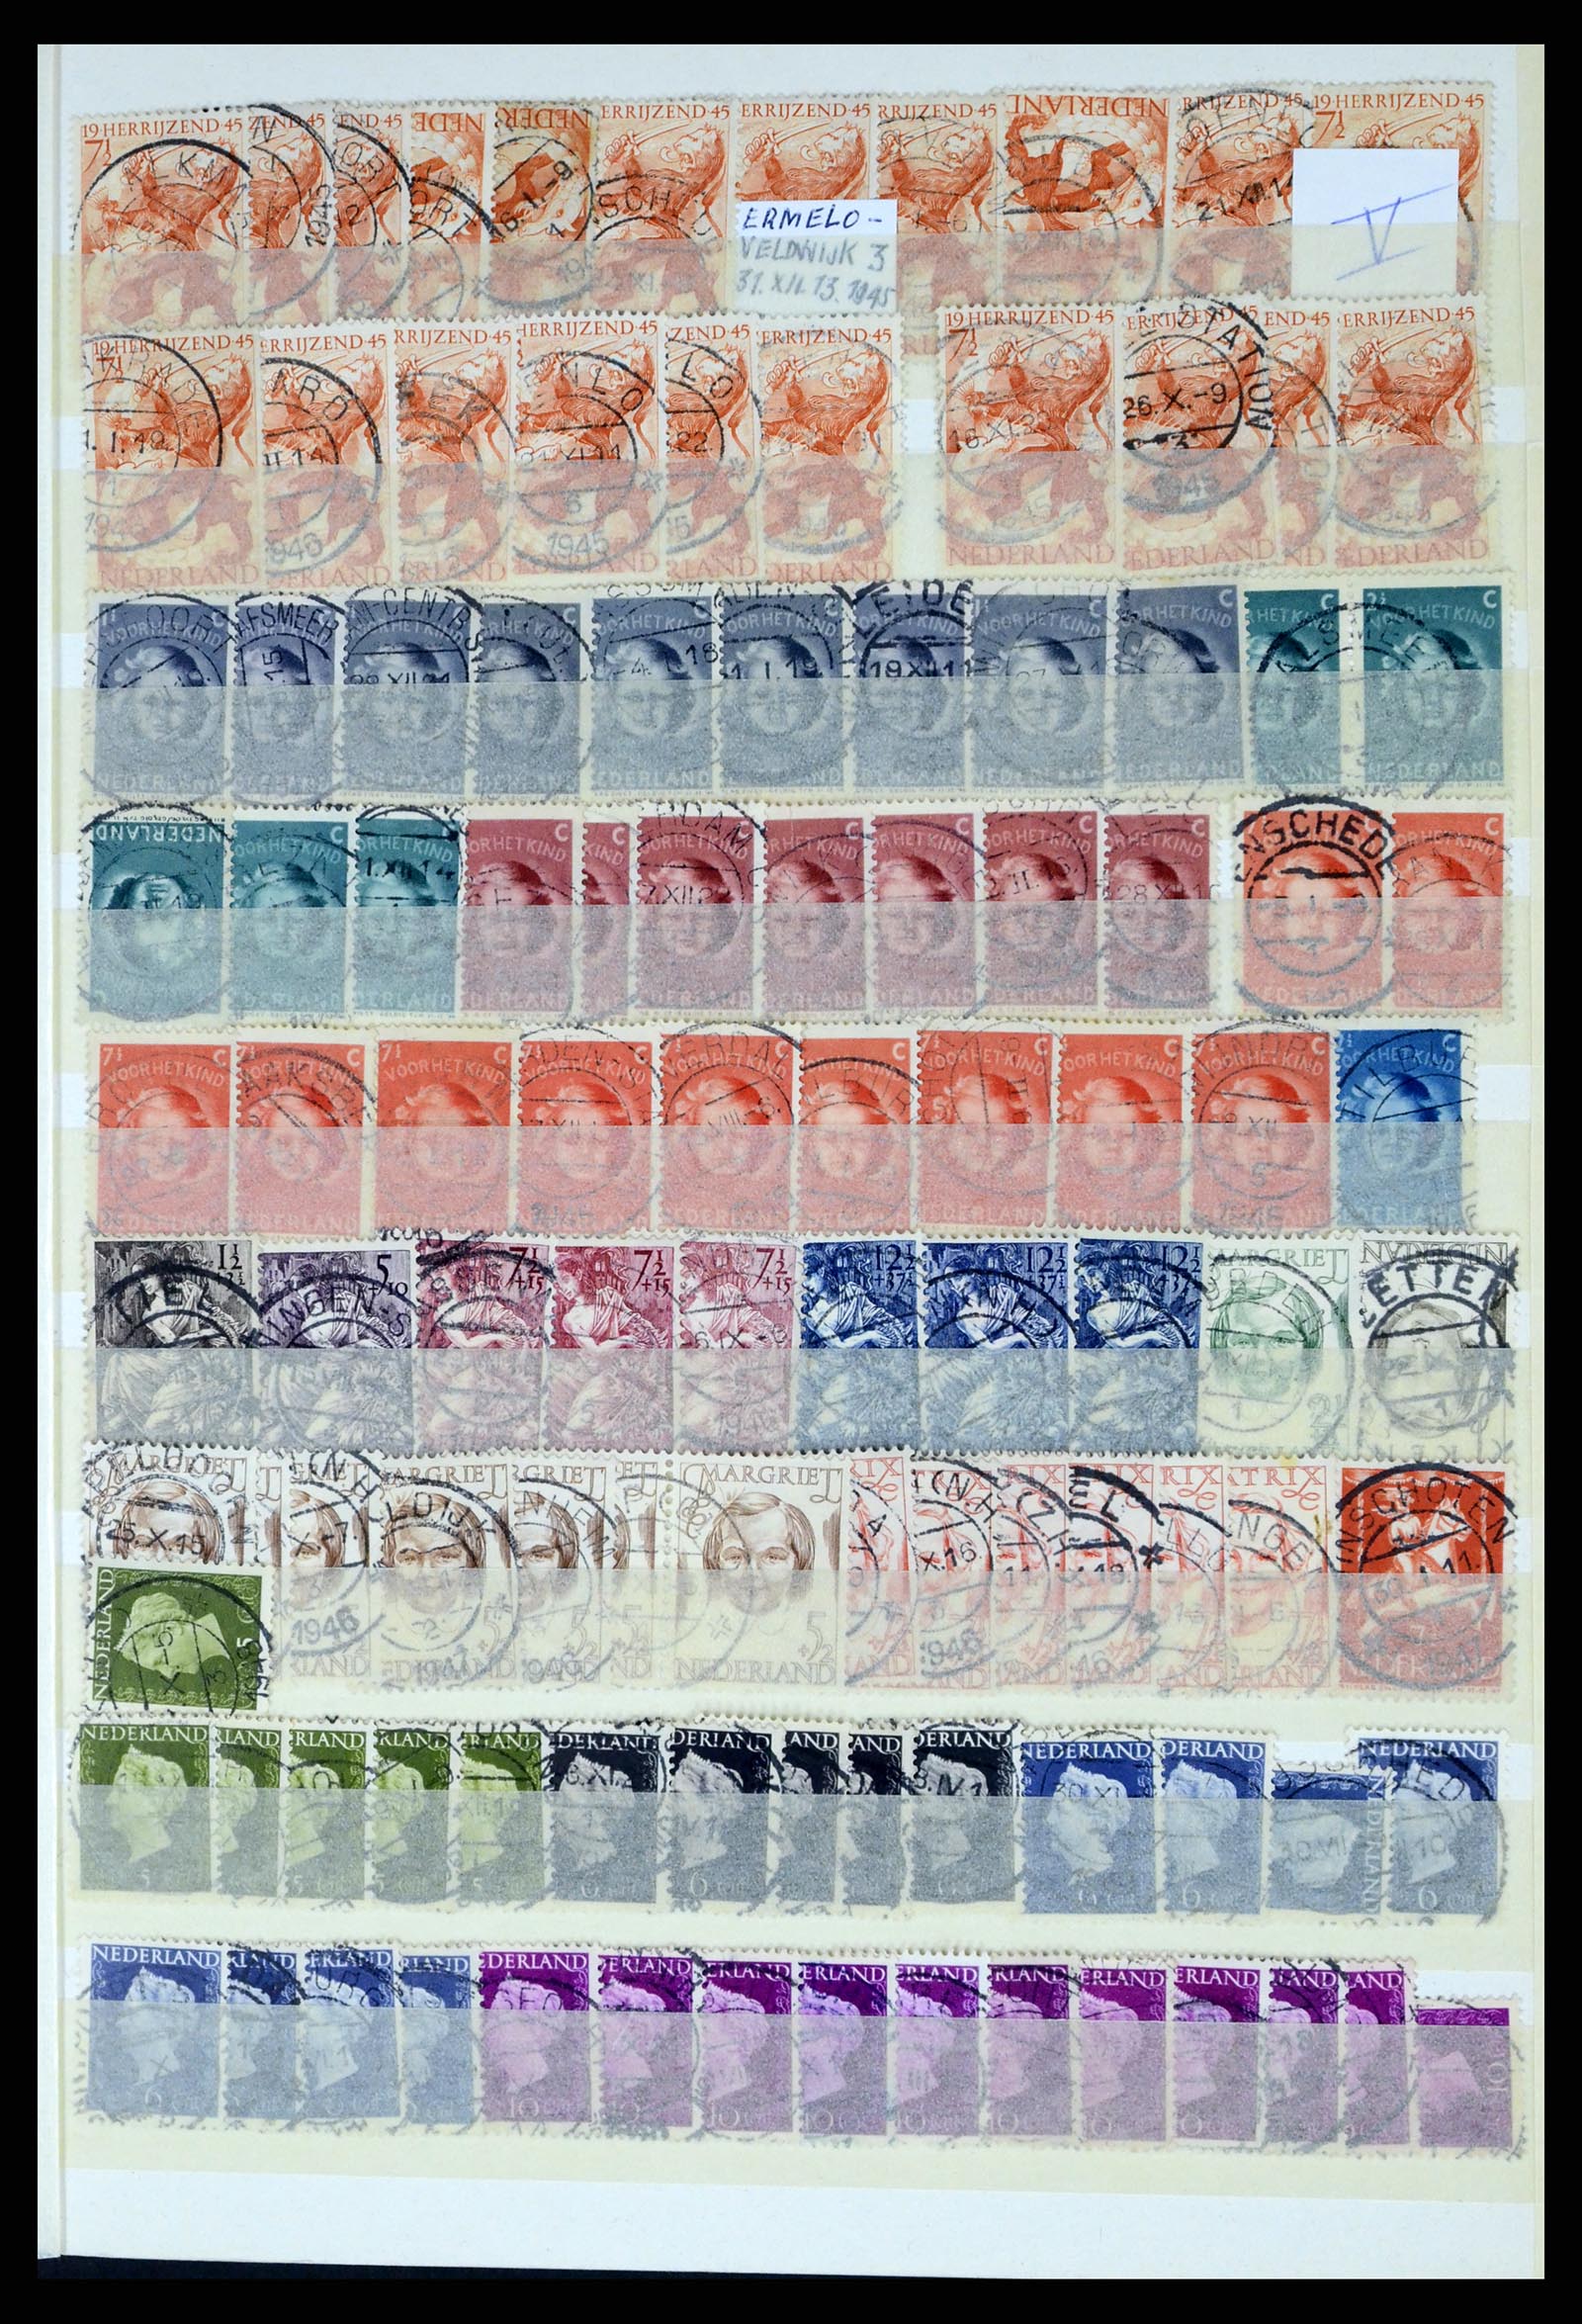 37424 043 - Stamp collection 37424 Netherlands shortbar cancels.